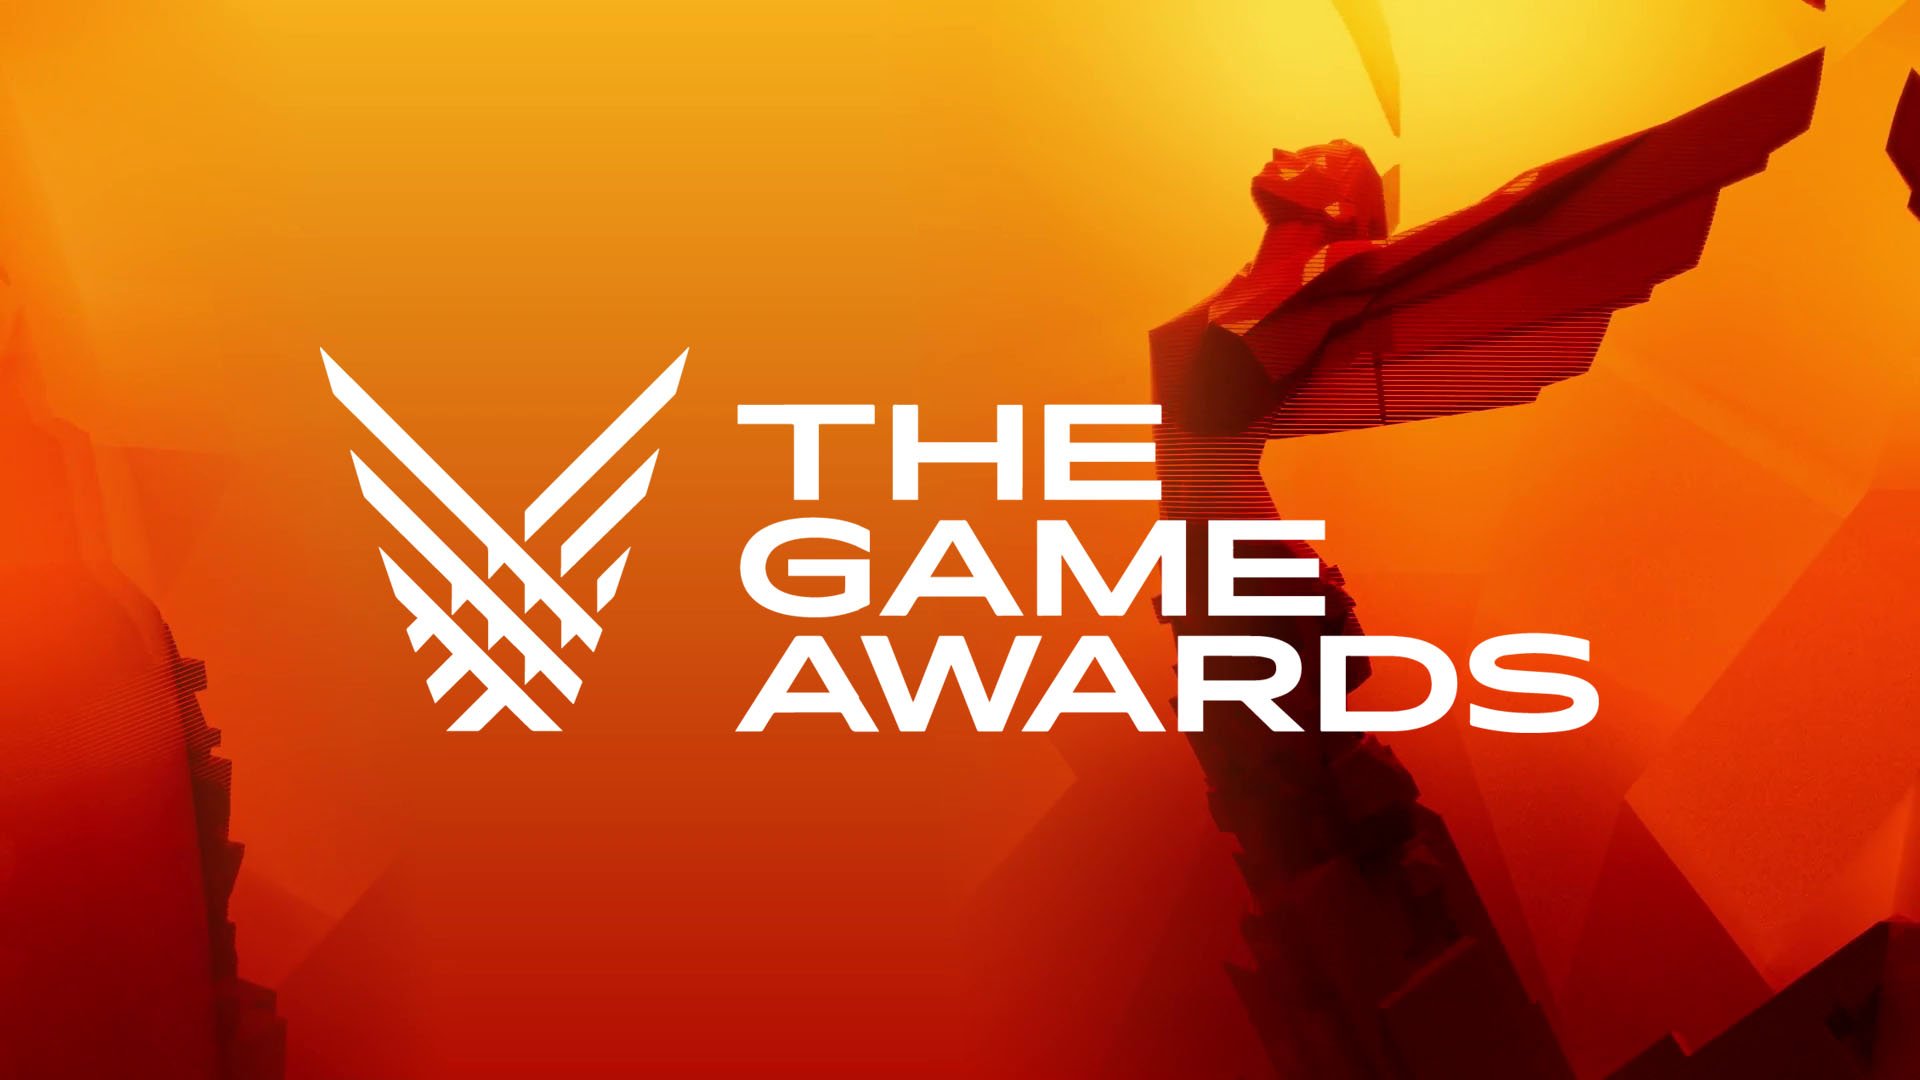 Player's Voice Award, The Game Awards 2022 Genshin Impact